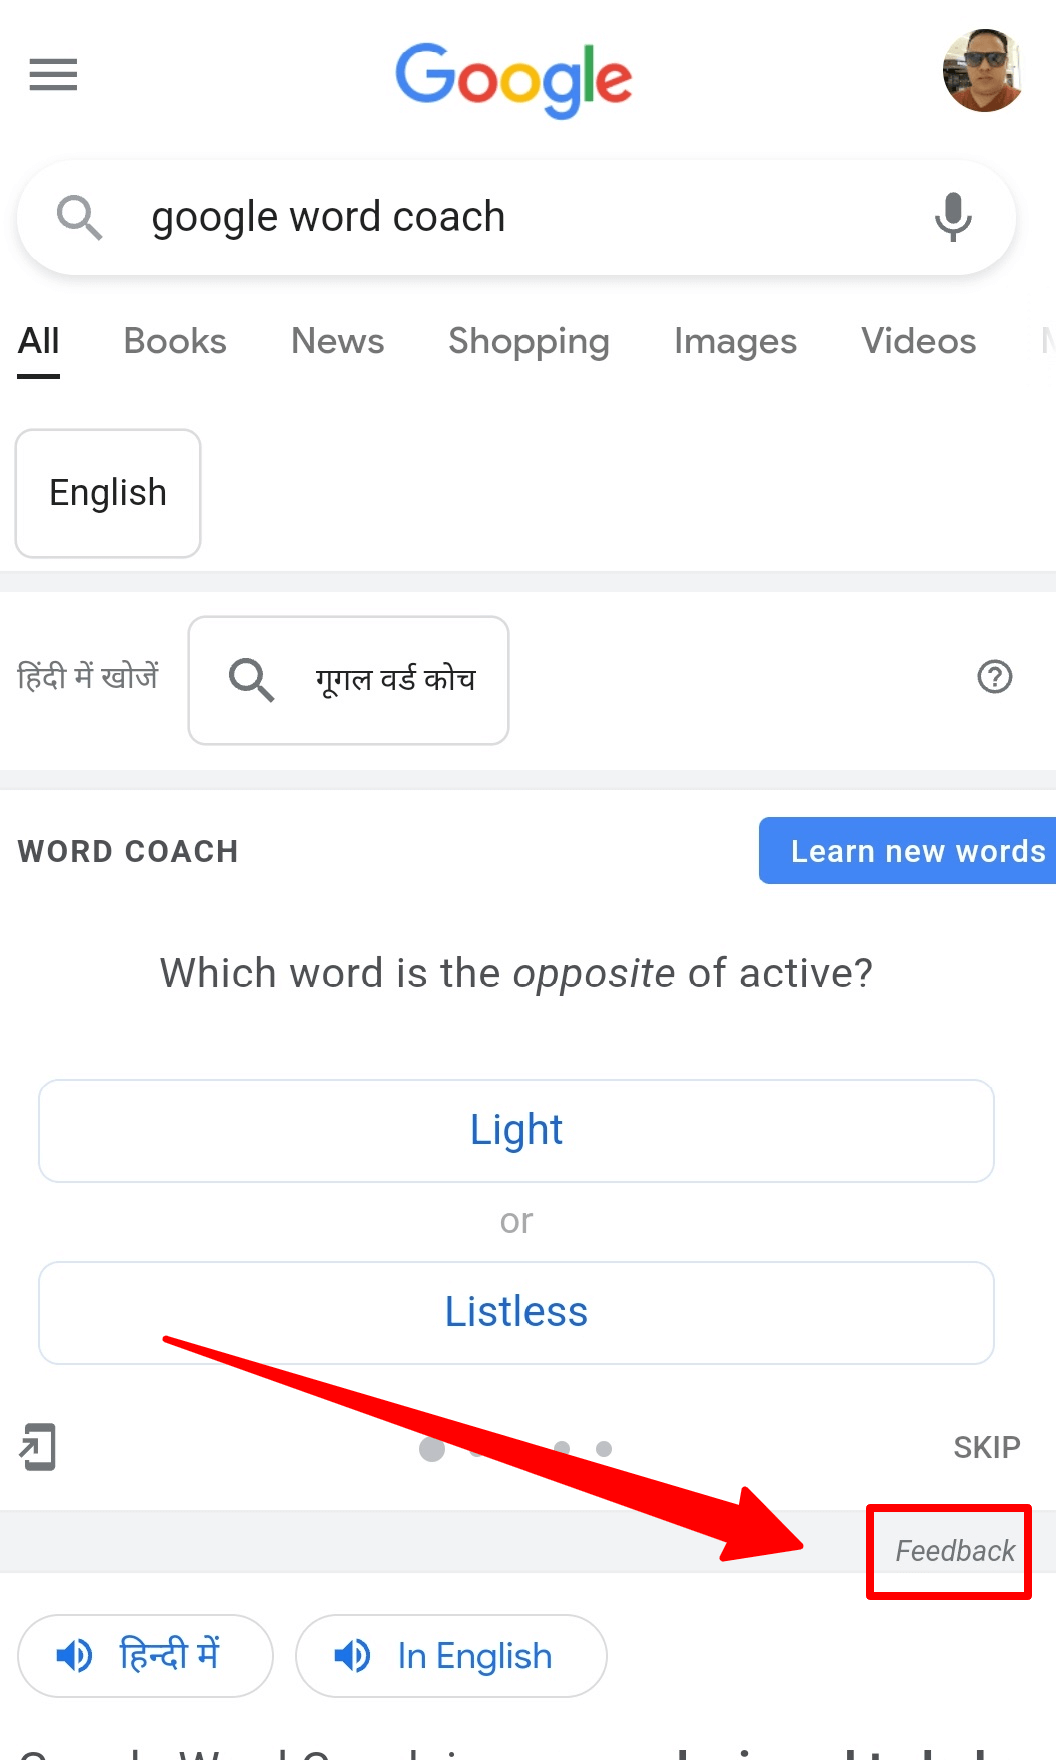 Google word coach feedback